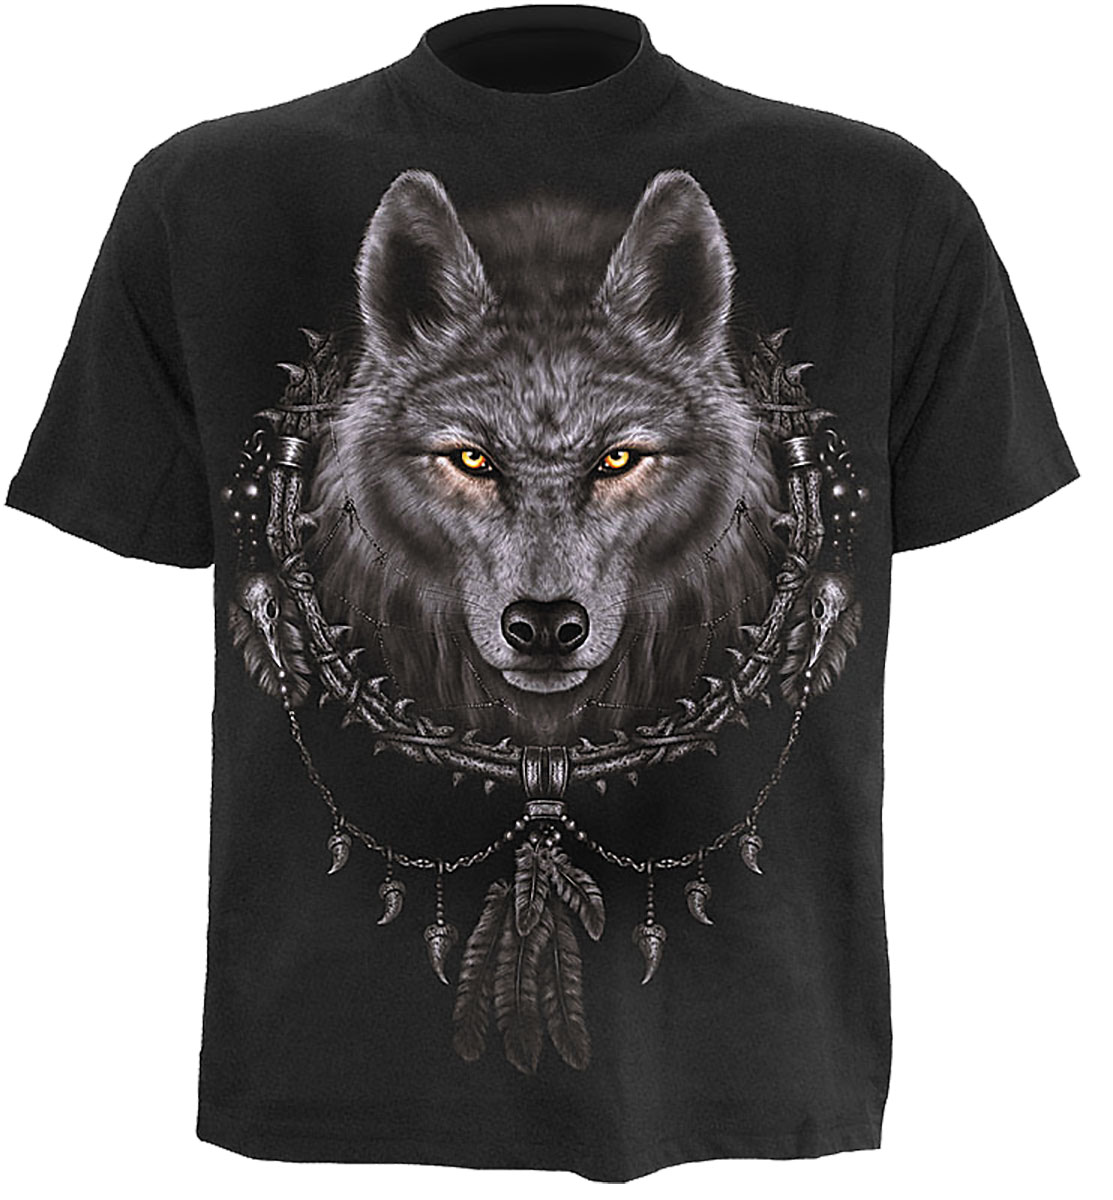 Spiral Wolf Dreams, T-Shirt Black|Wolf|Mystical|Celtic|Native American ...